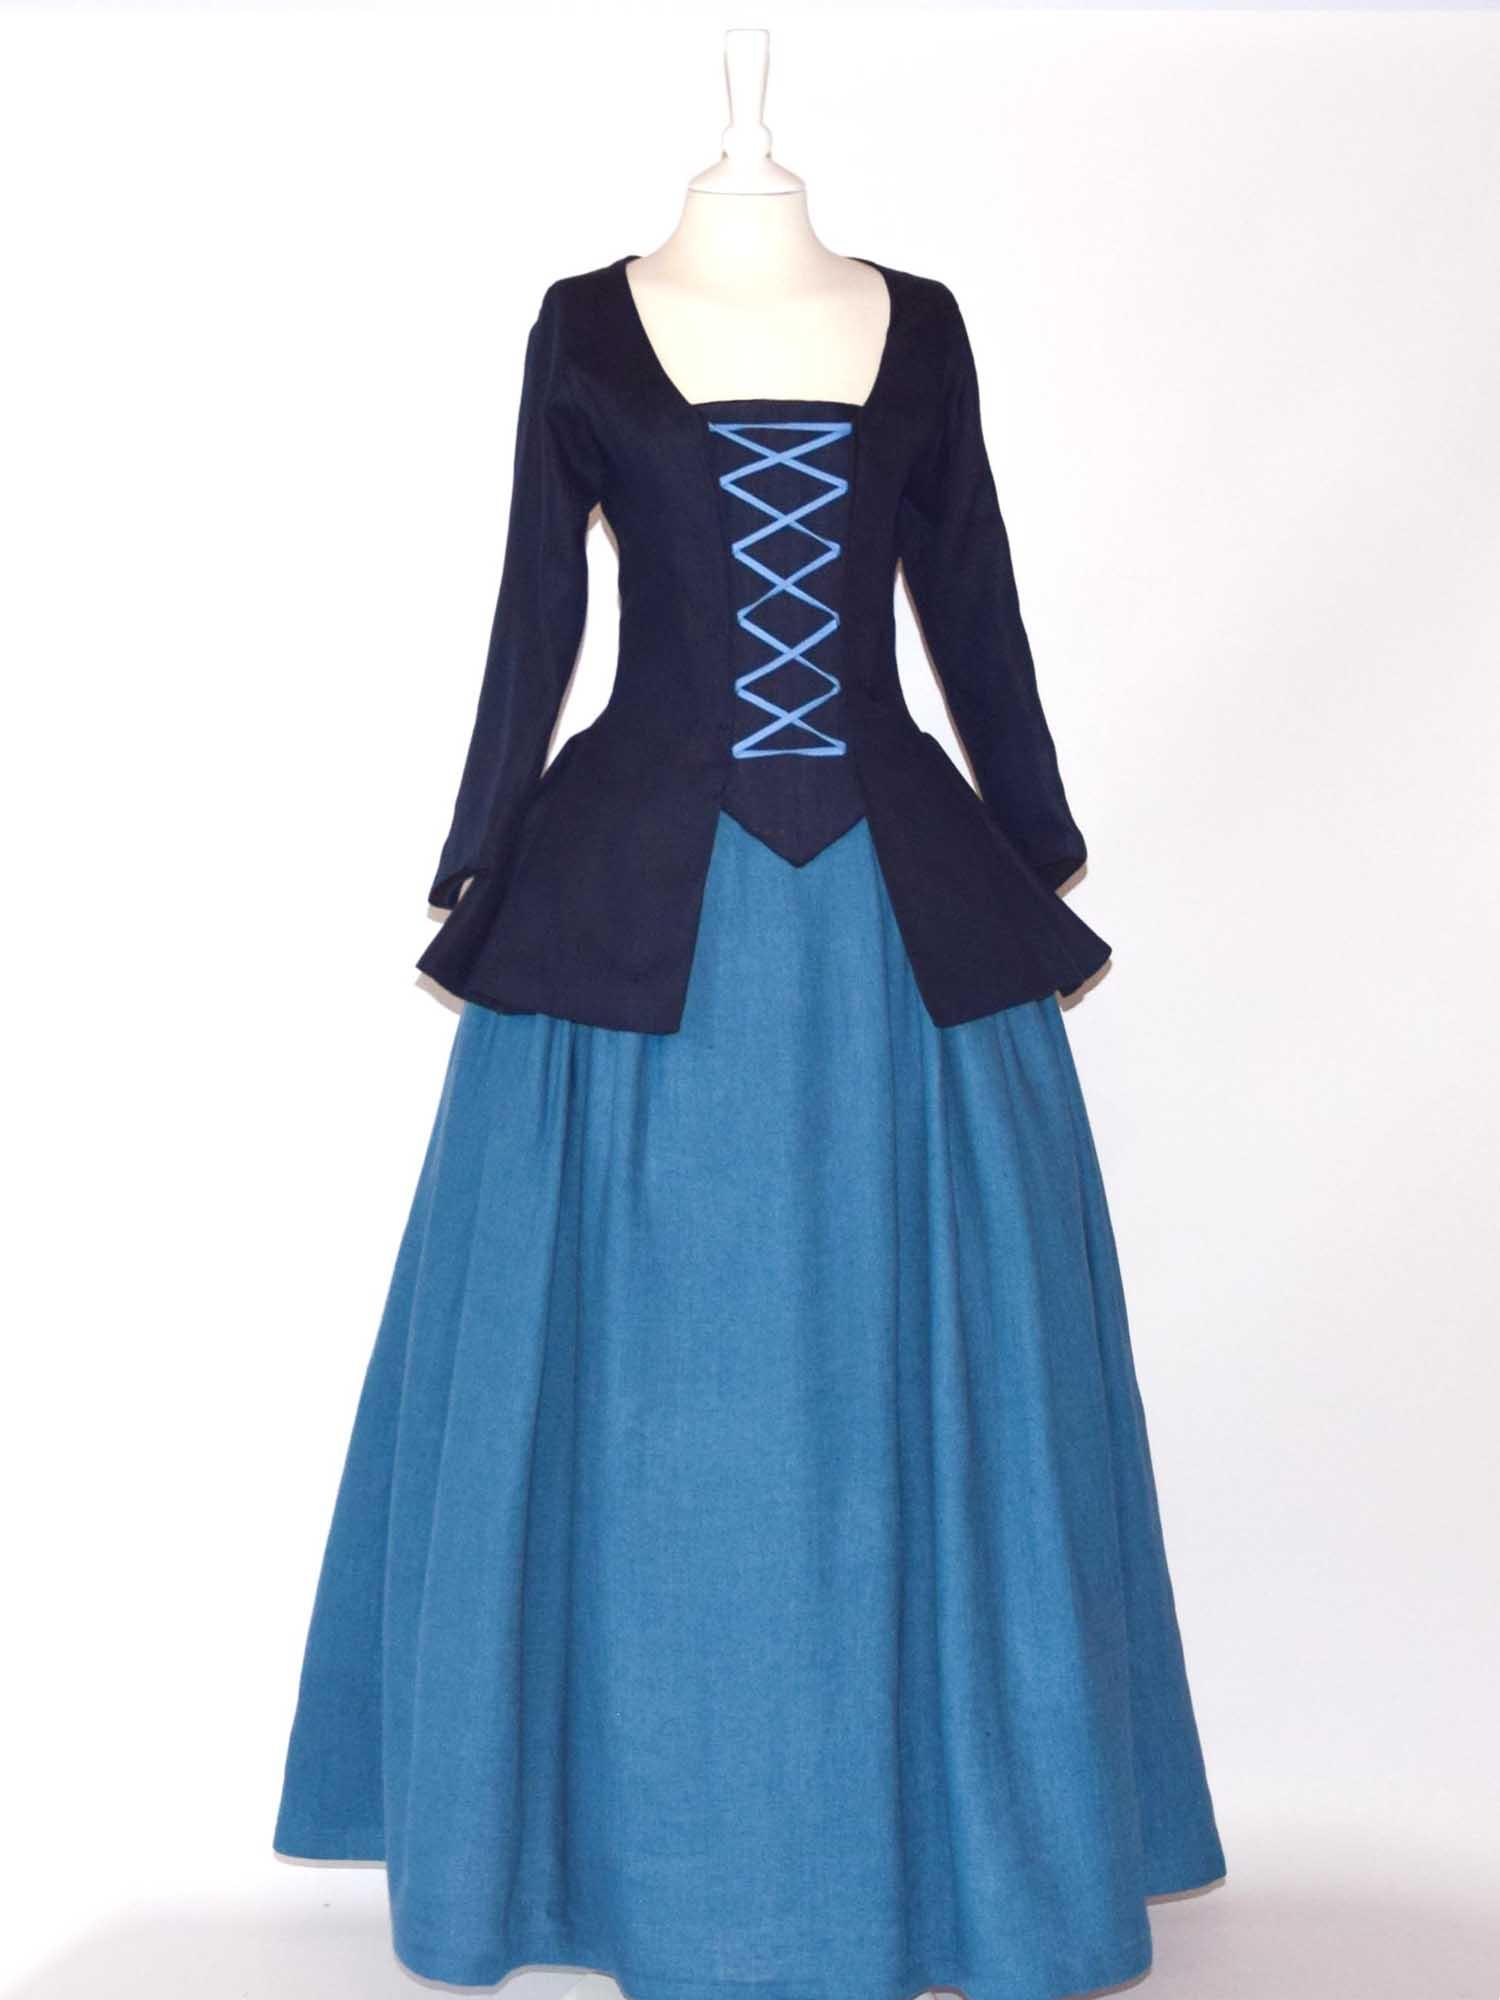 JANET, Colonial Costume in Night & Steel Blue Linen - Atelier Serraspina - Costume 18ème siècle en lin bleu nuit & bleu acier